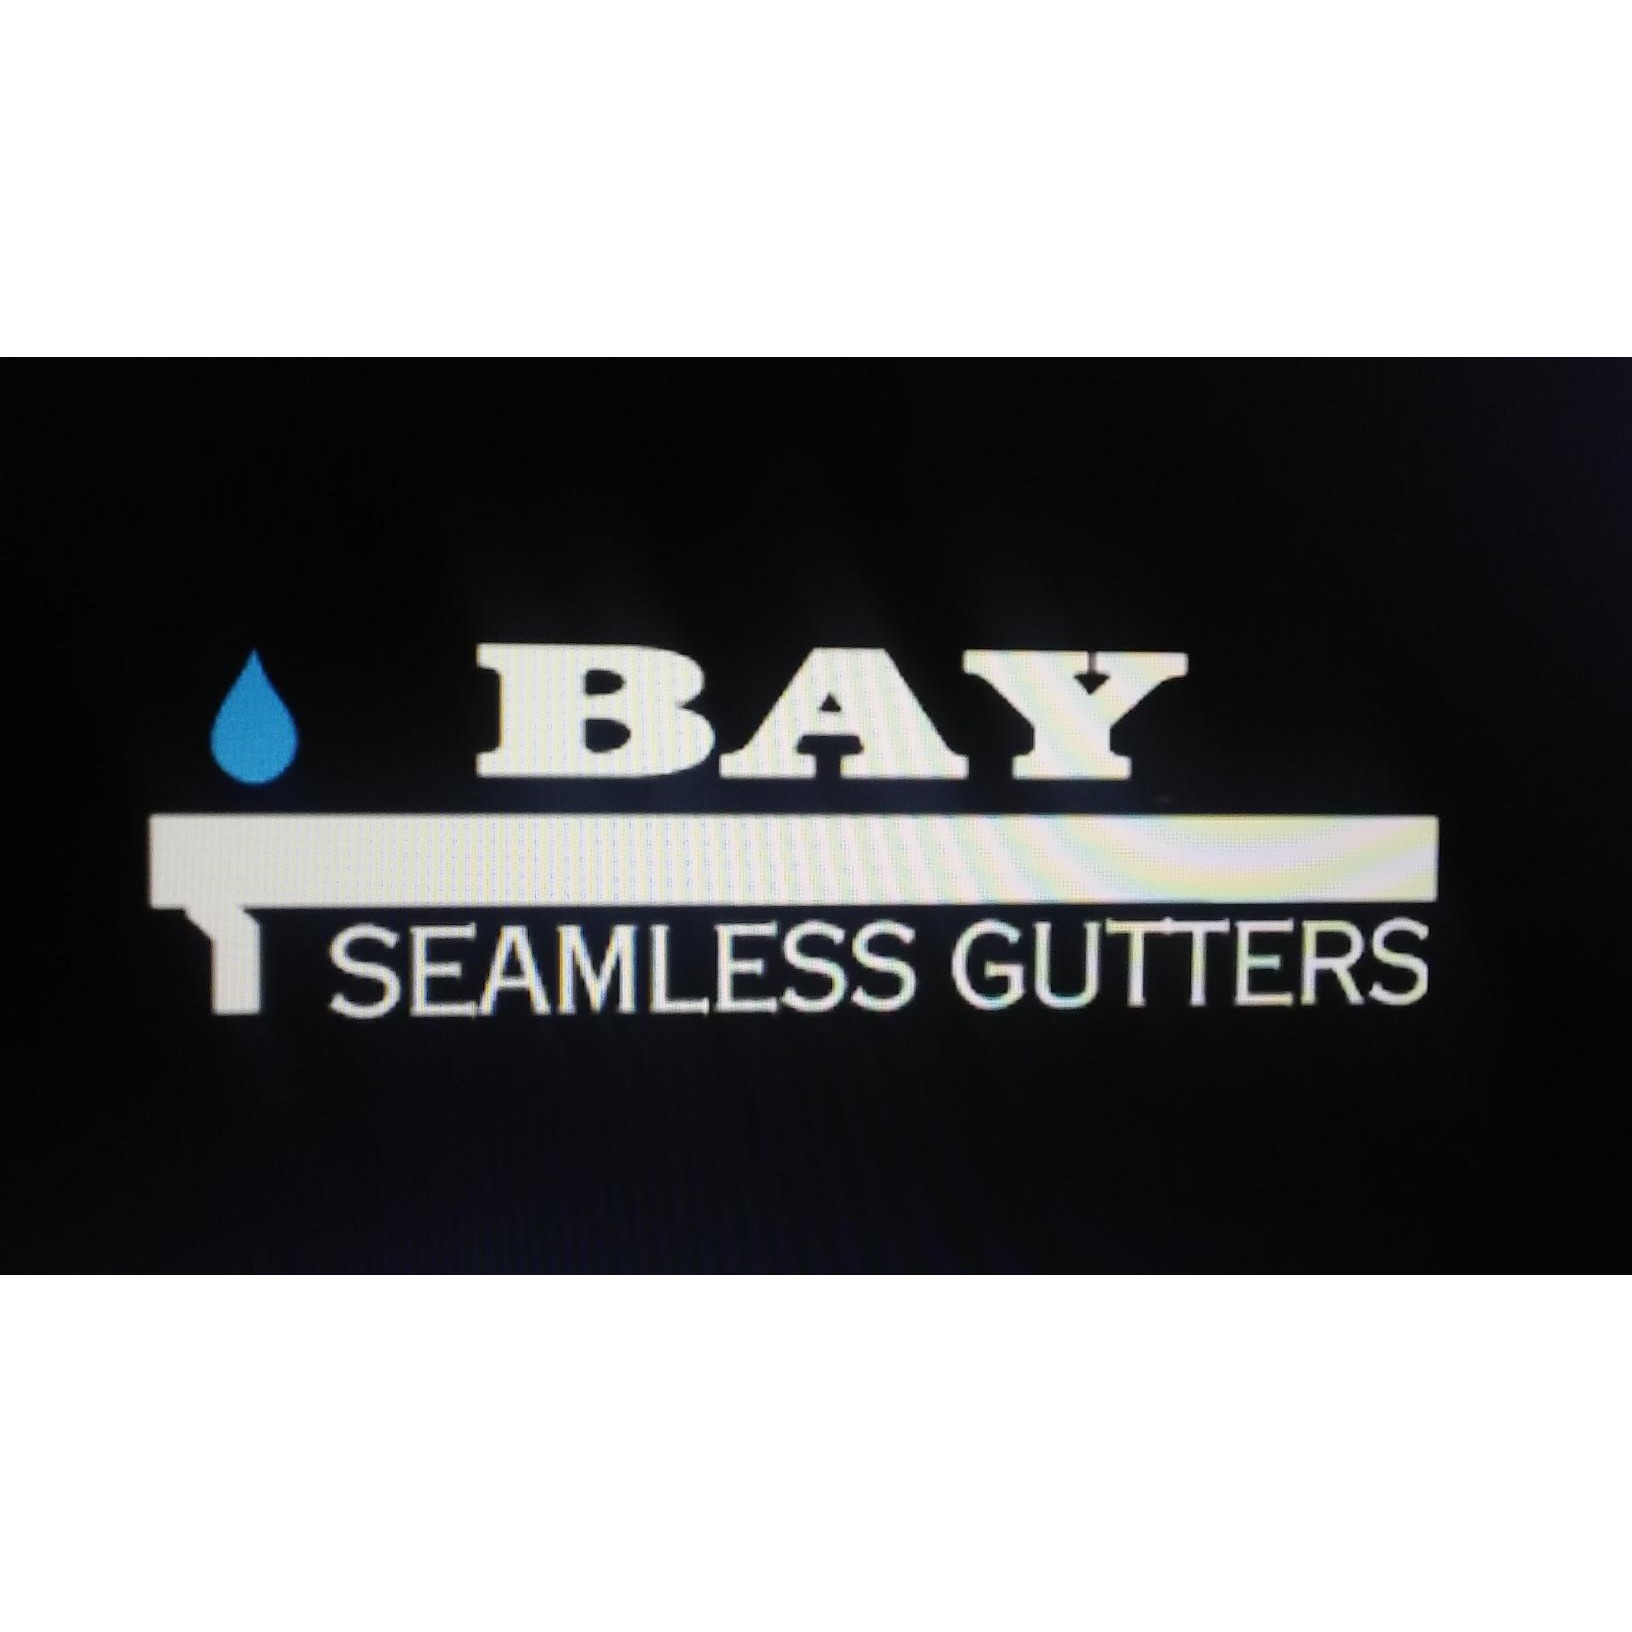 Bay Seamless Gutters - Lynn Haven, FL 32444 - (850)215-9344 | ShowMeLocal.com